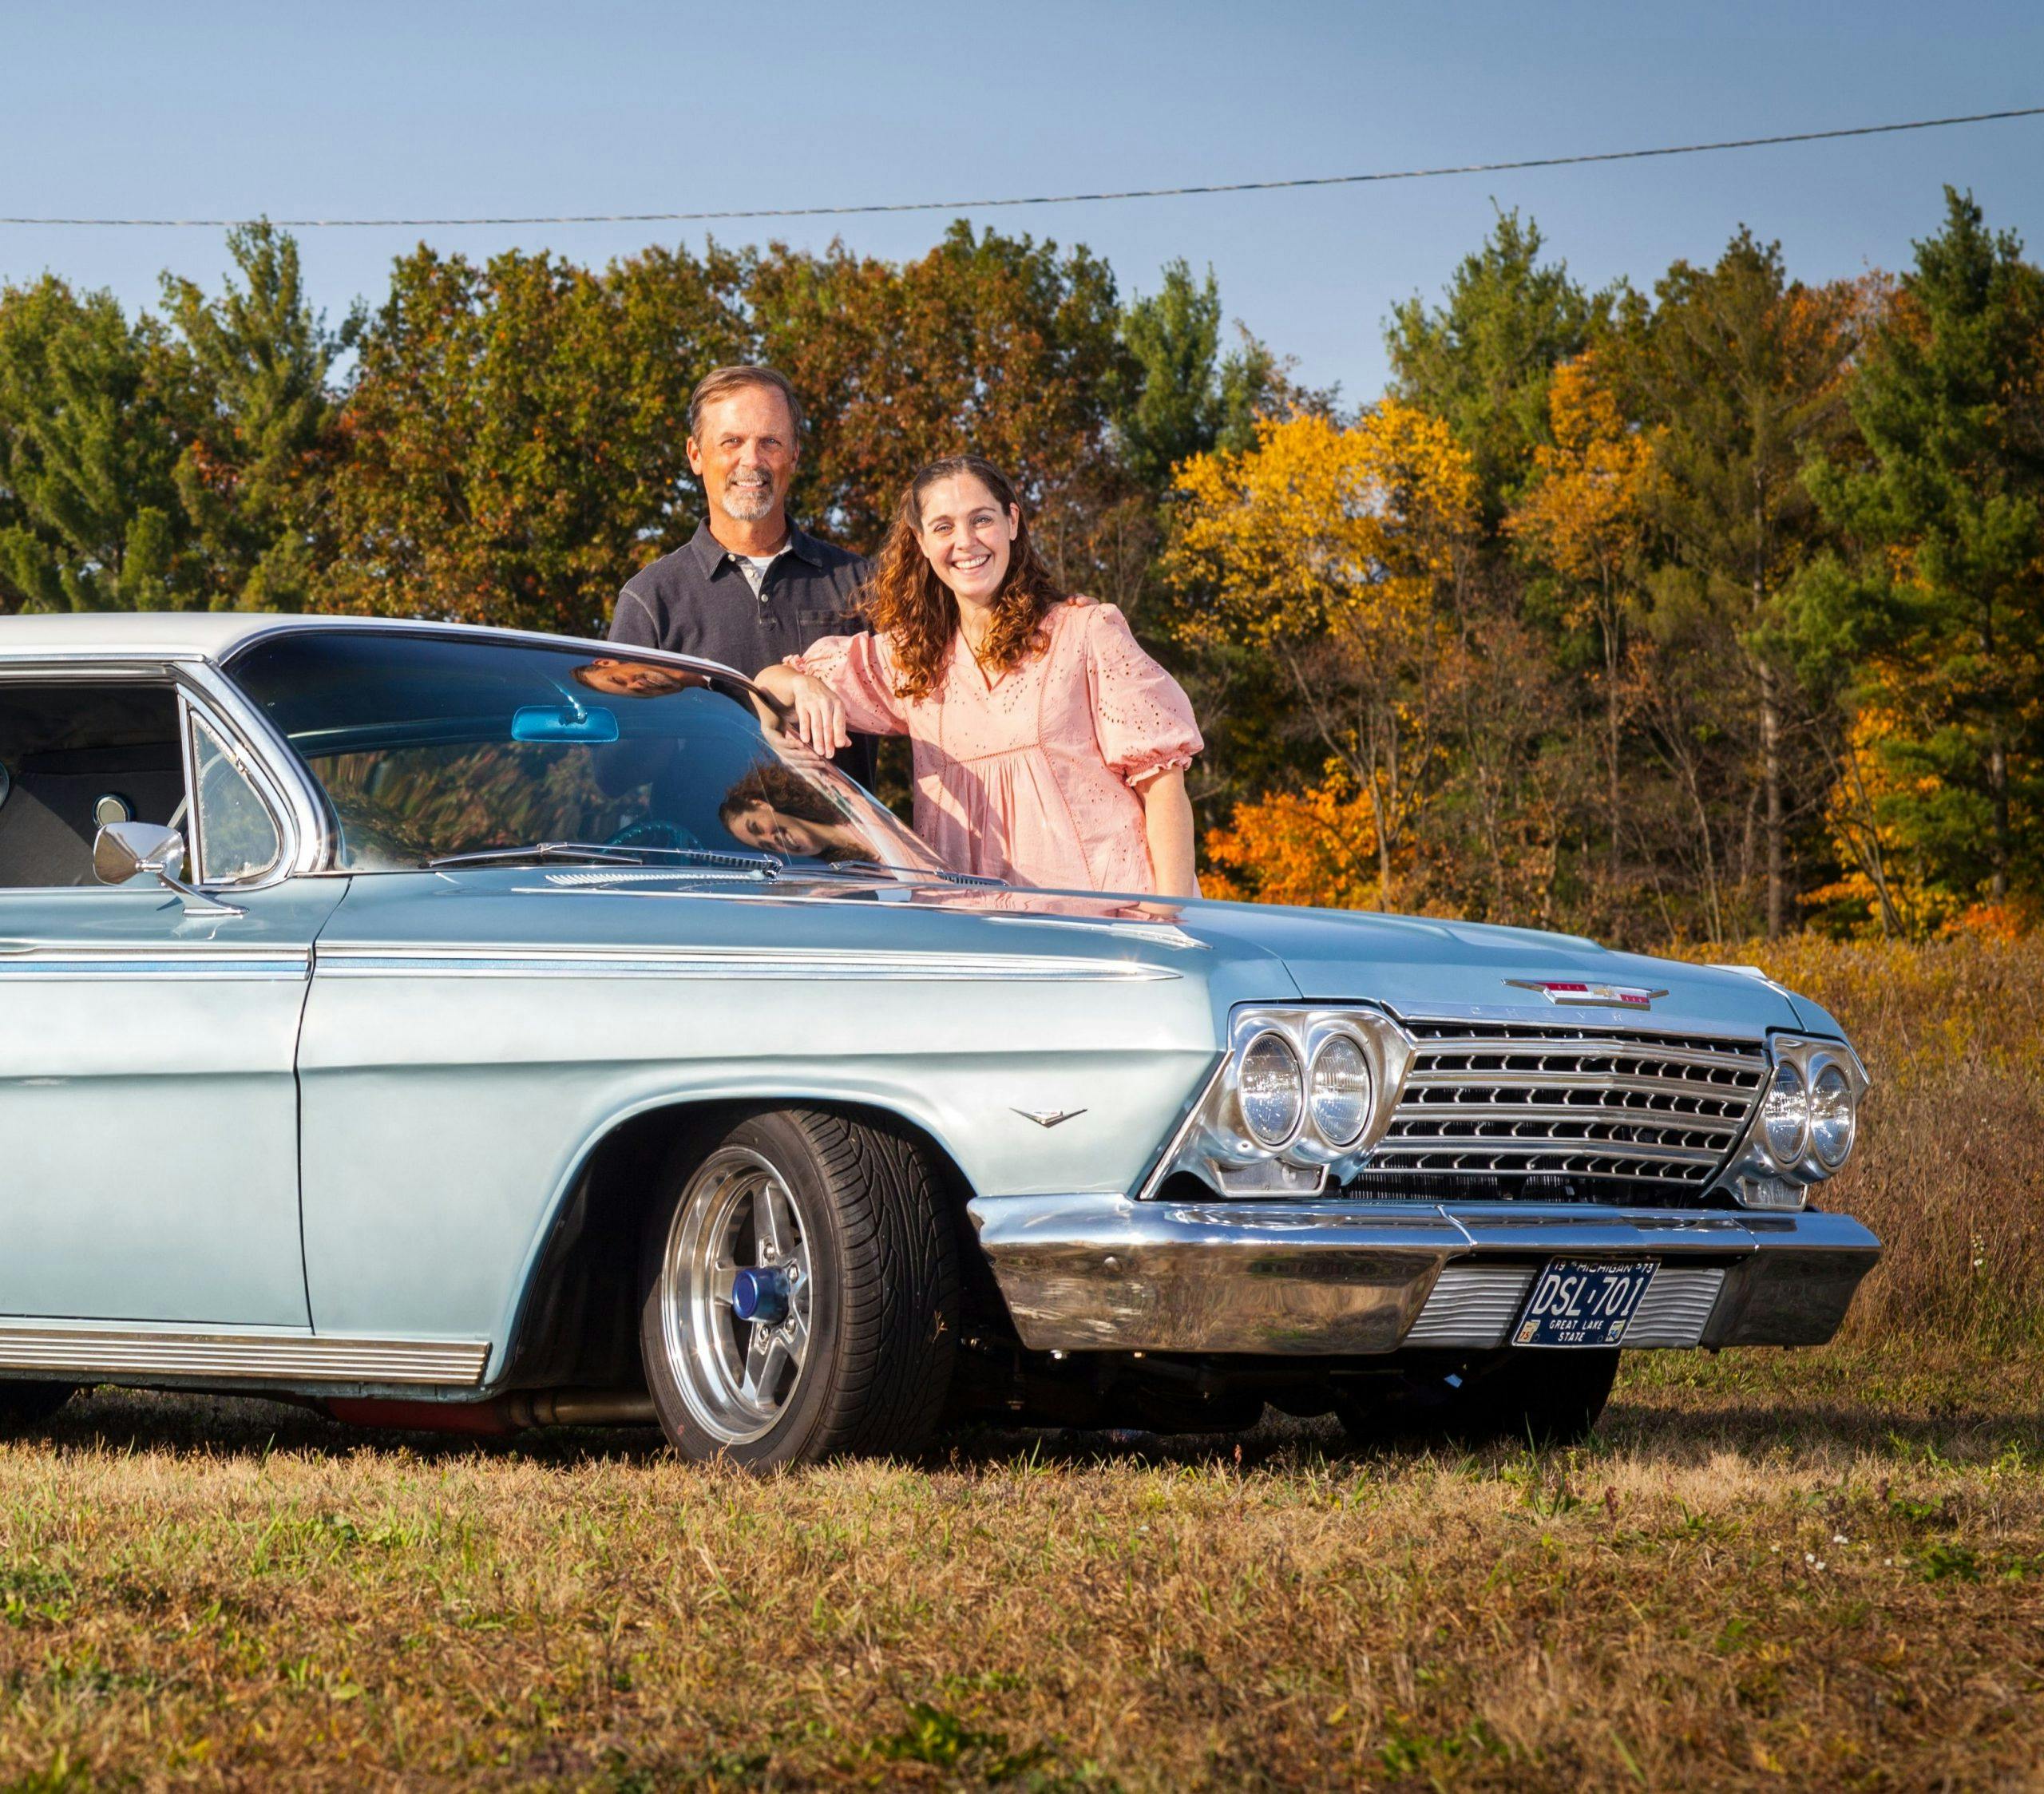 Jason Prince - 1962 Chevrolet Impala - Jason and Lynn outside the car